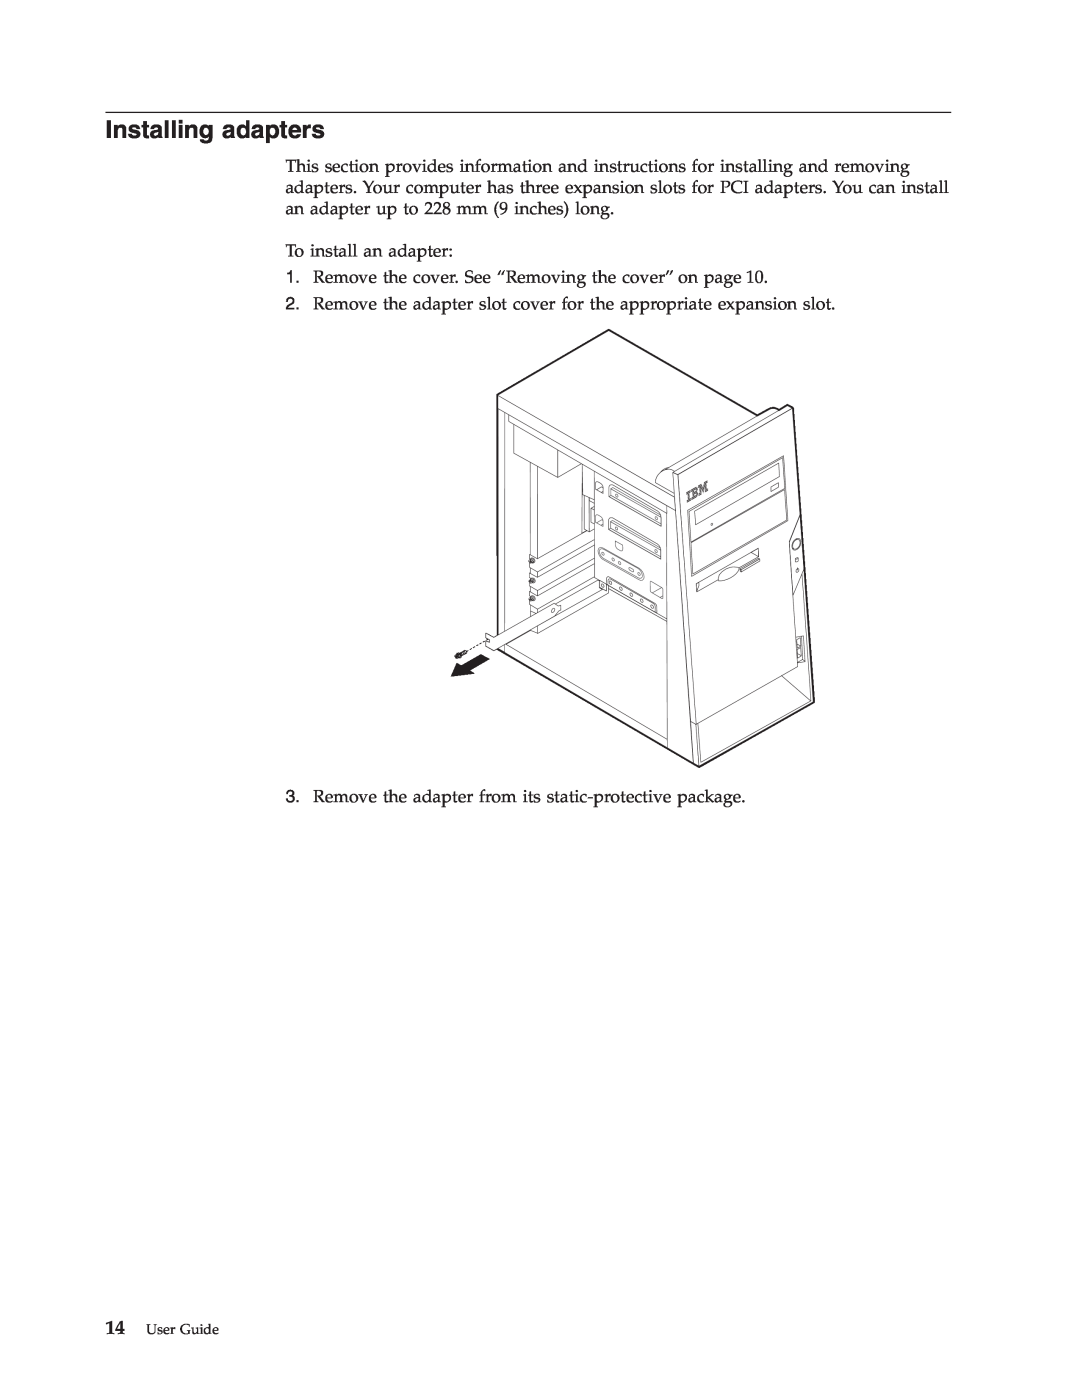 IBM 6824, 2289 manual Installing adapters, User Guide 